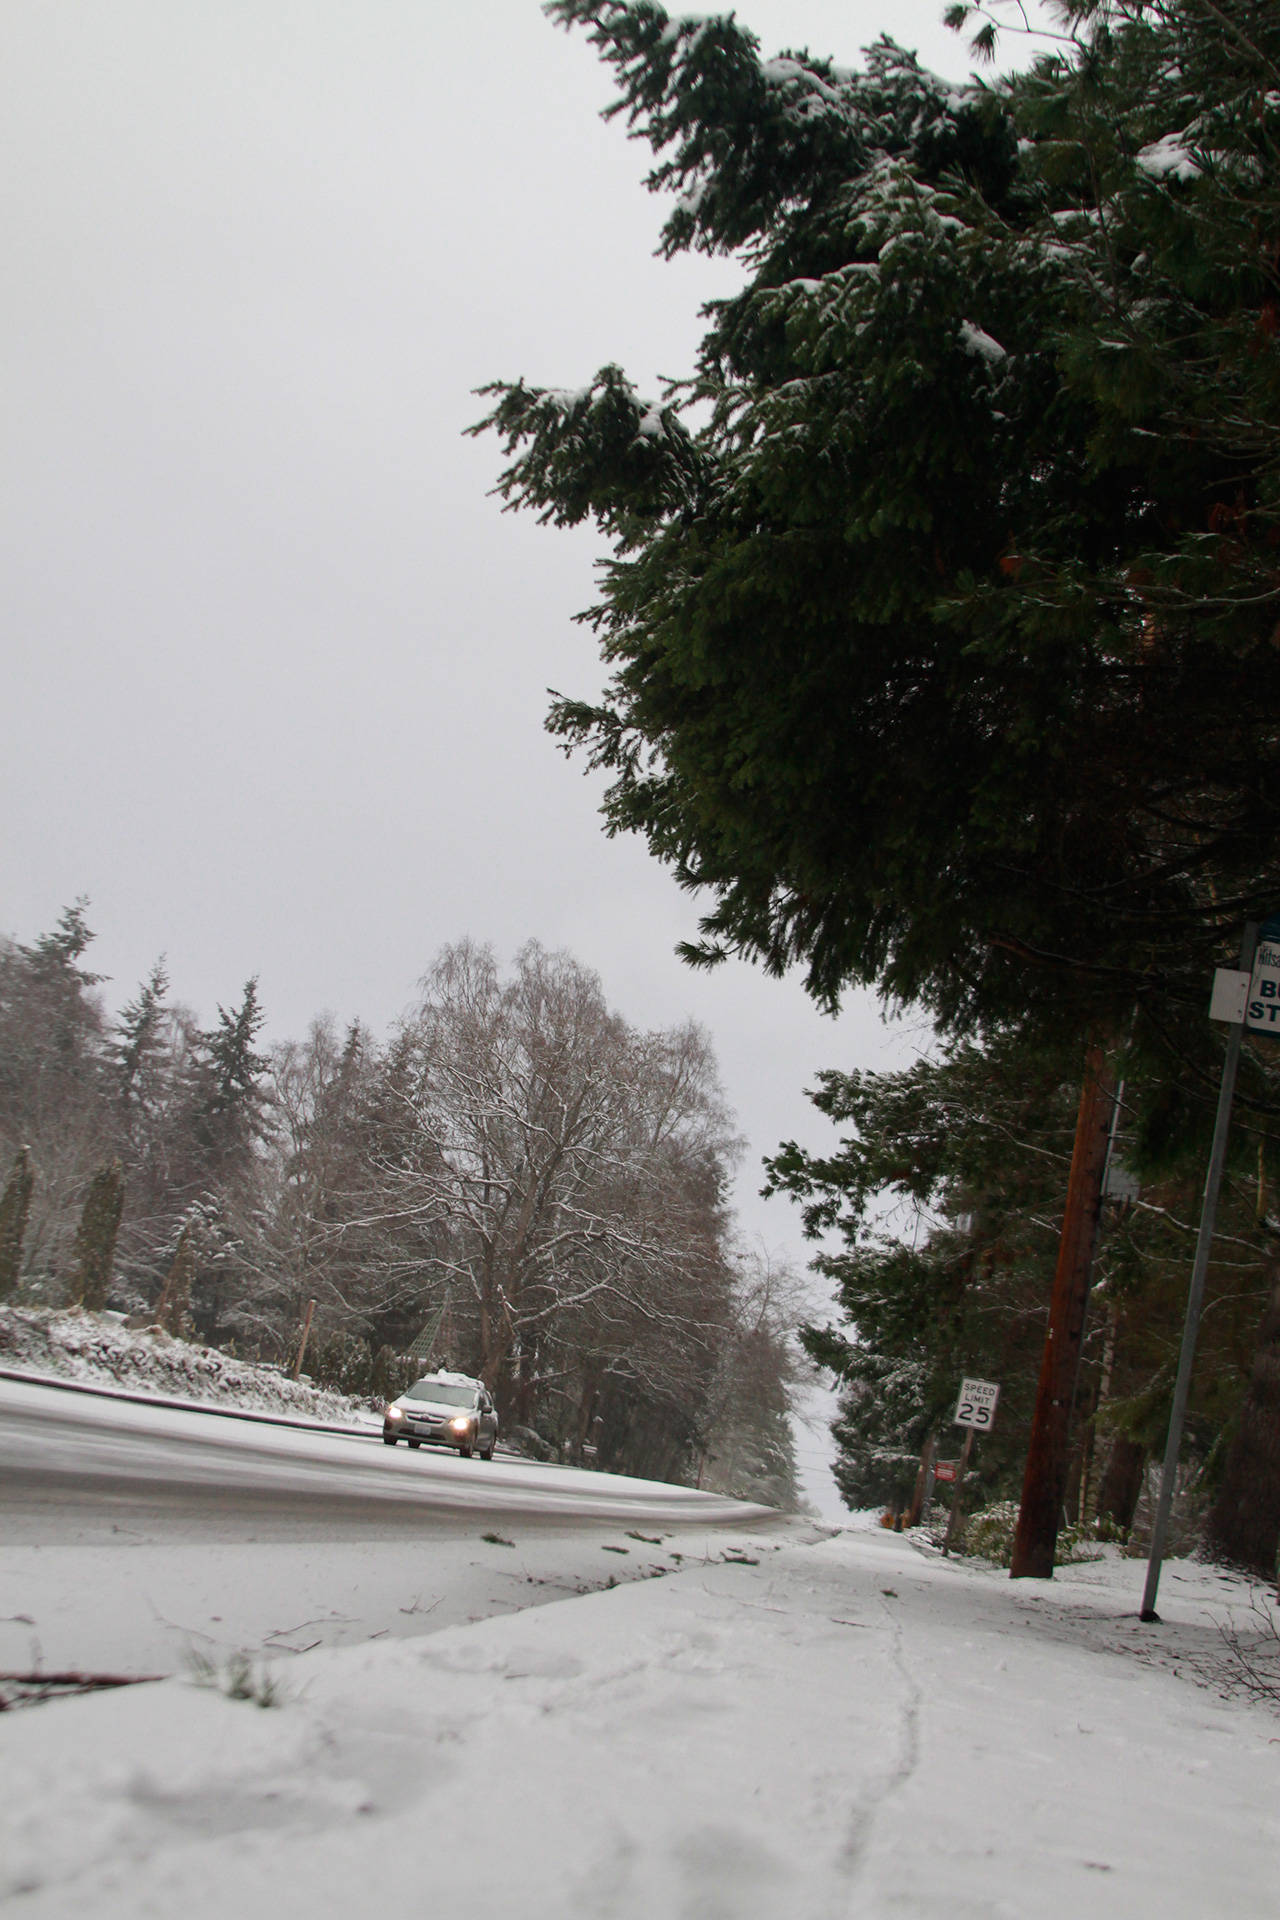 Snowy streets kept many drivers off the road this week on Bainbridge. (Luciano Marano | Bainbridge Island Review)